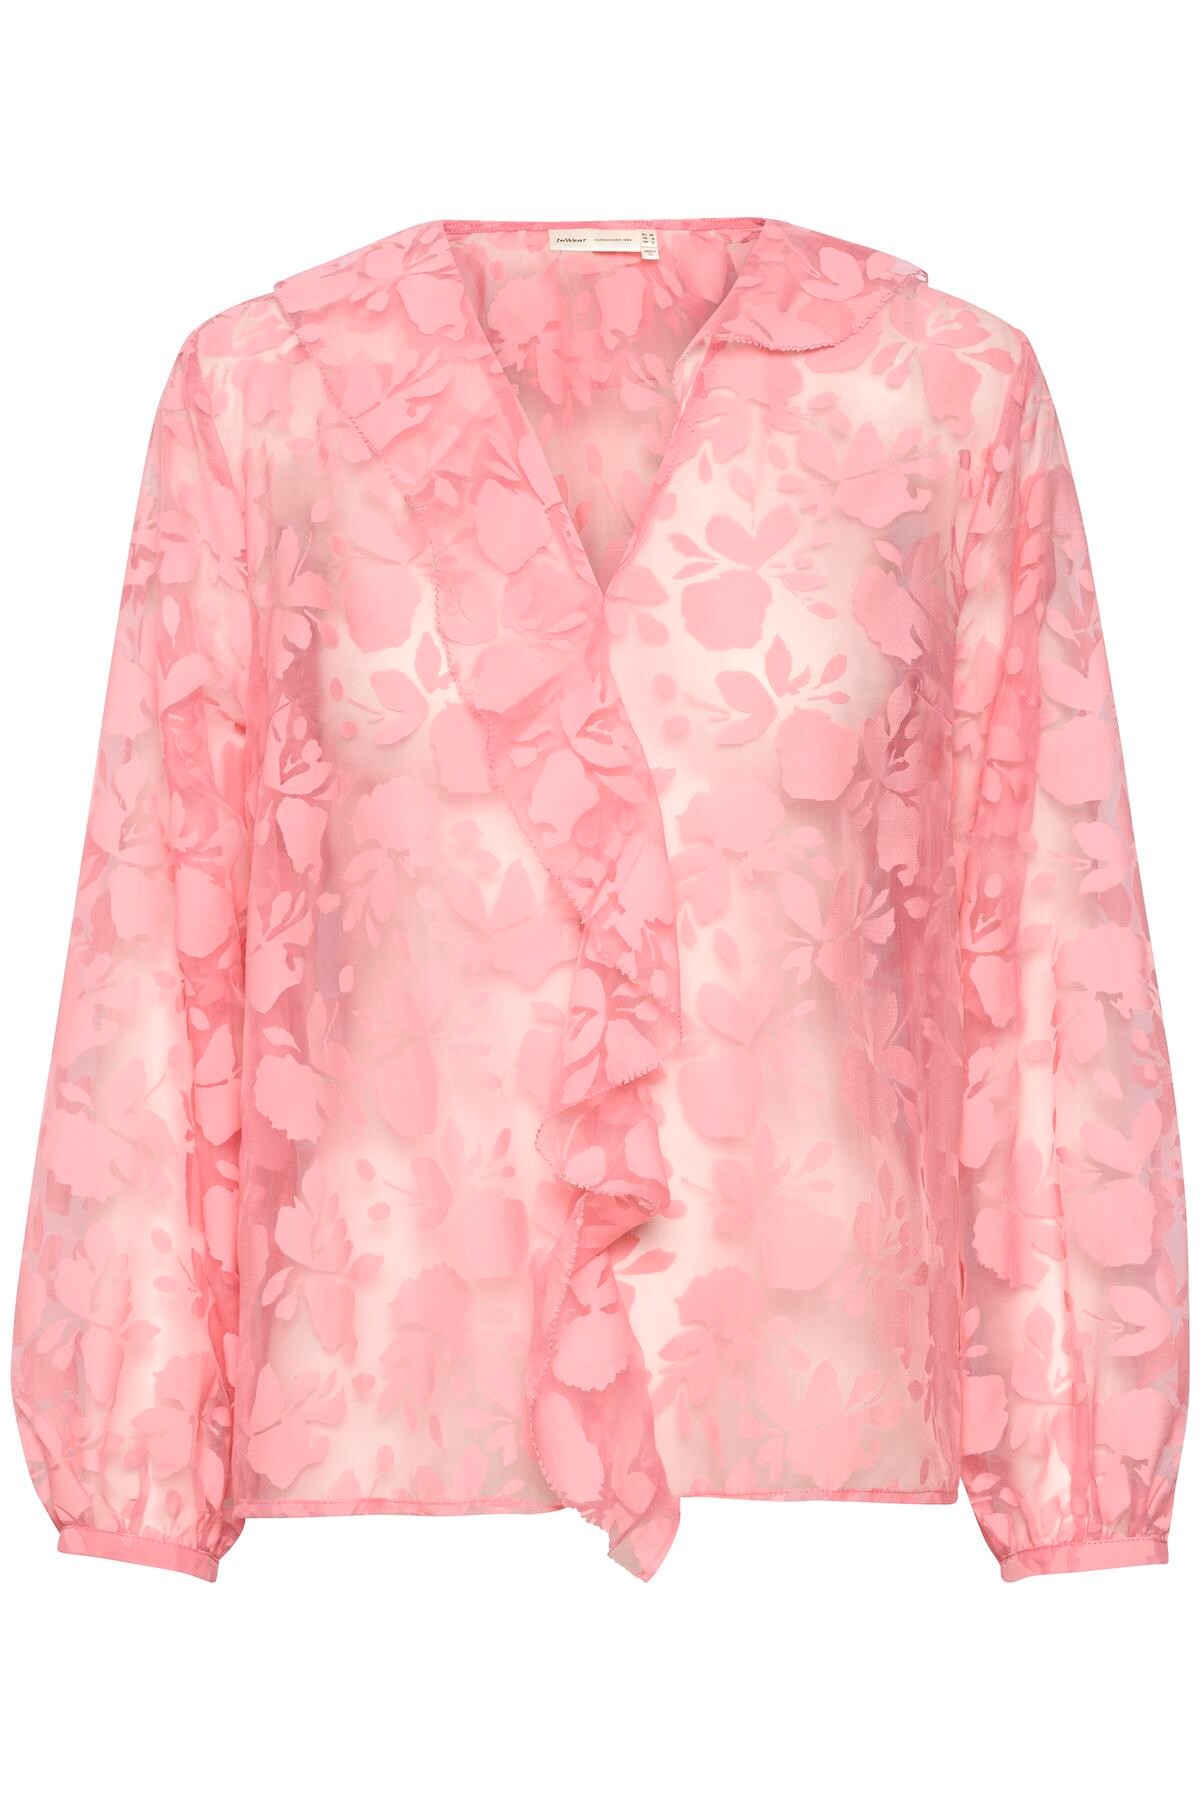 Inwear Maciaiw Bluse, Farve: Smoothie Pink, Størrelse: 34, Dame